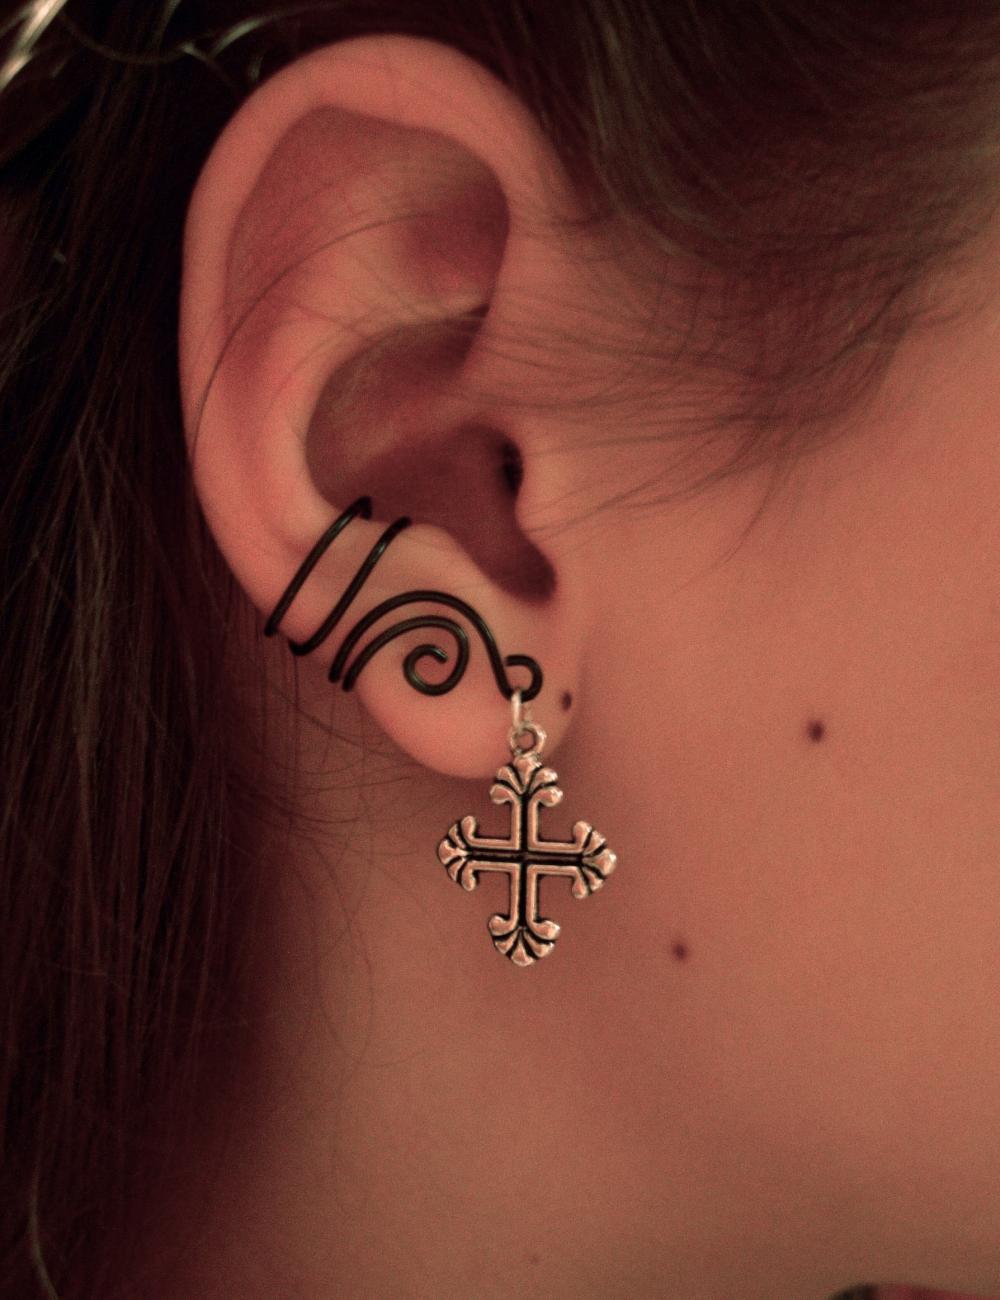 Ear Cuff With Antiqued Silver Cross Crucifix Charm